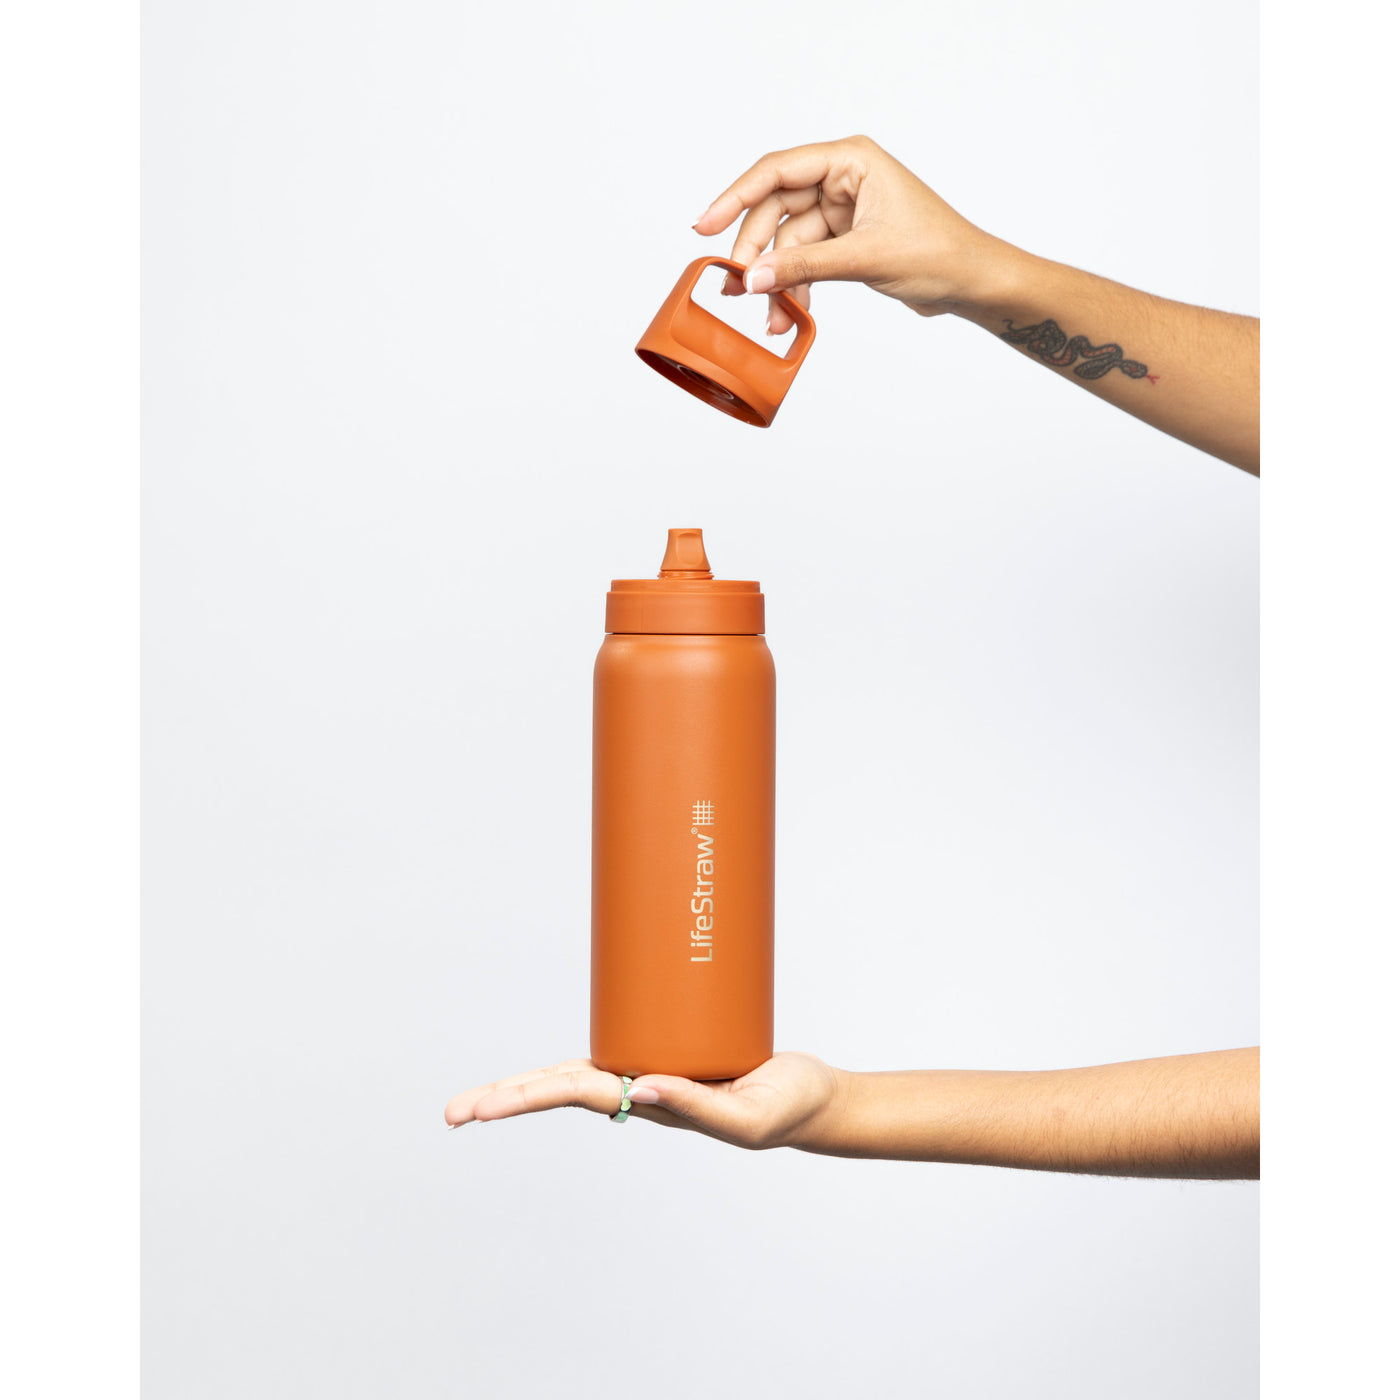 LifeStraw Go 2.0 Stainless Steel Water Filter Bottle